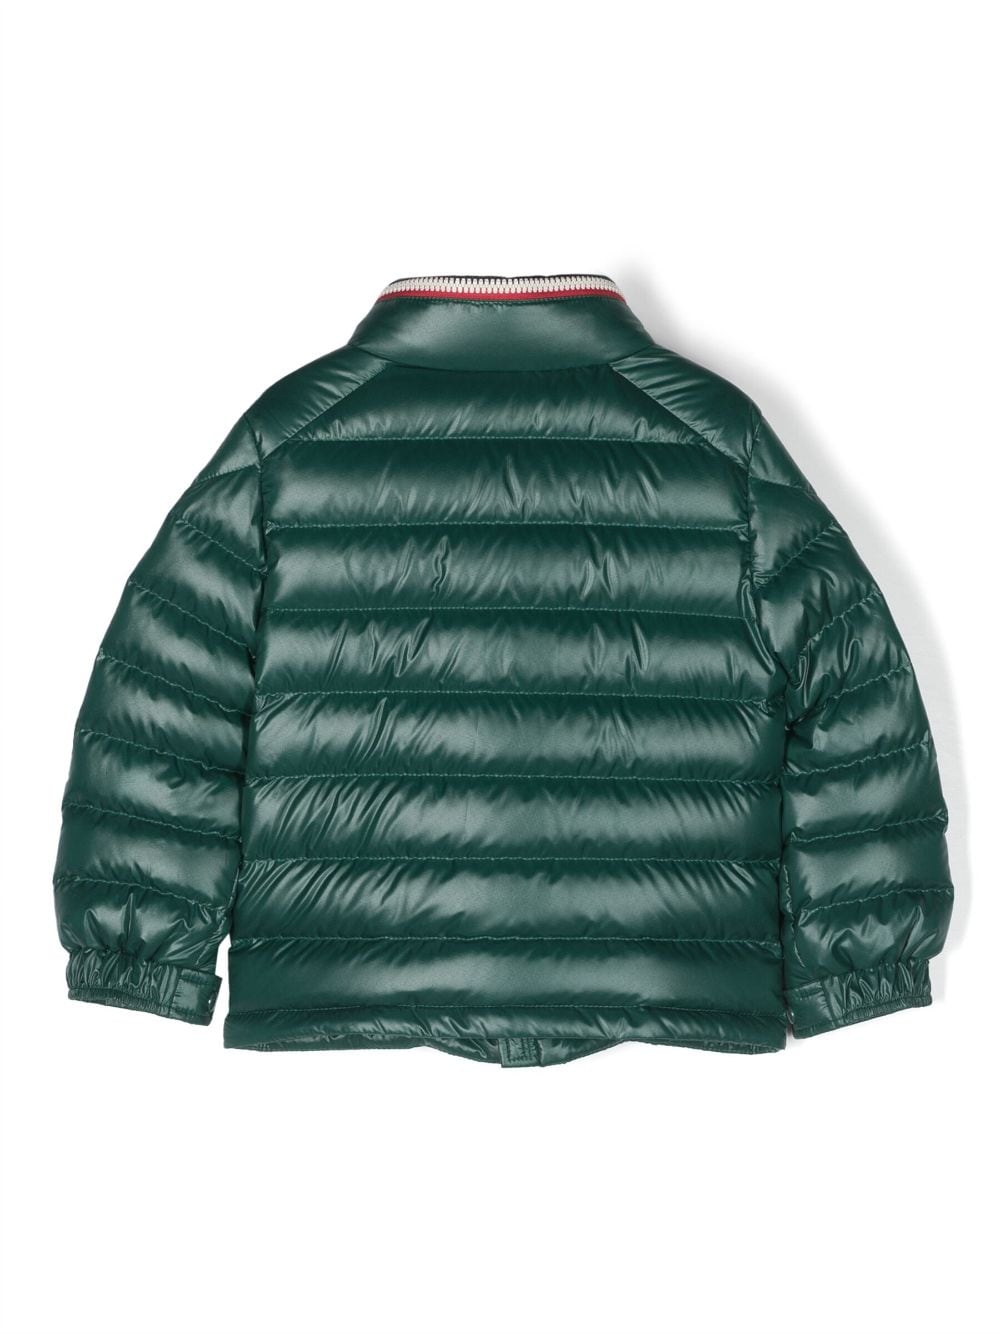 Forest green Bourne jacket for boys